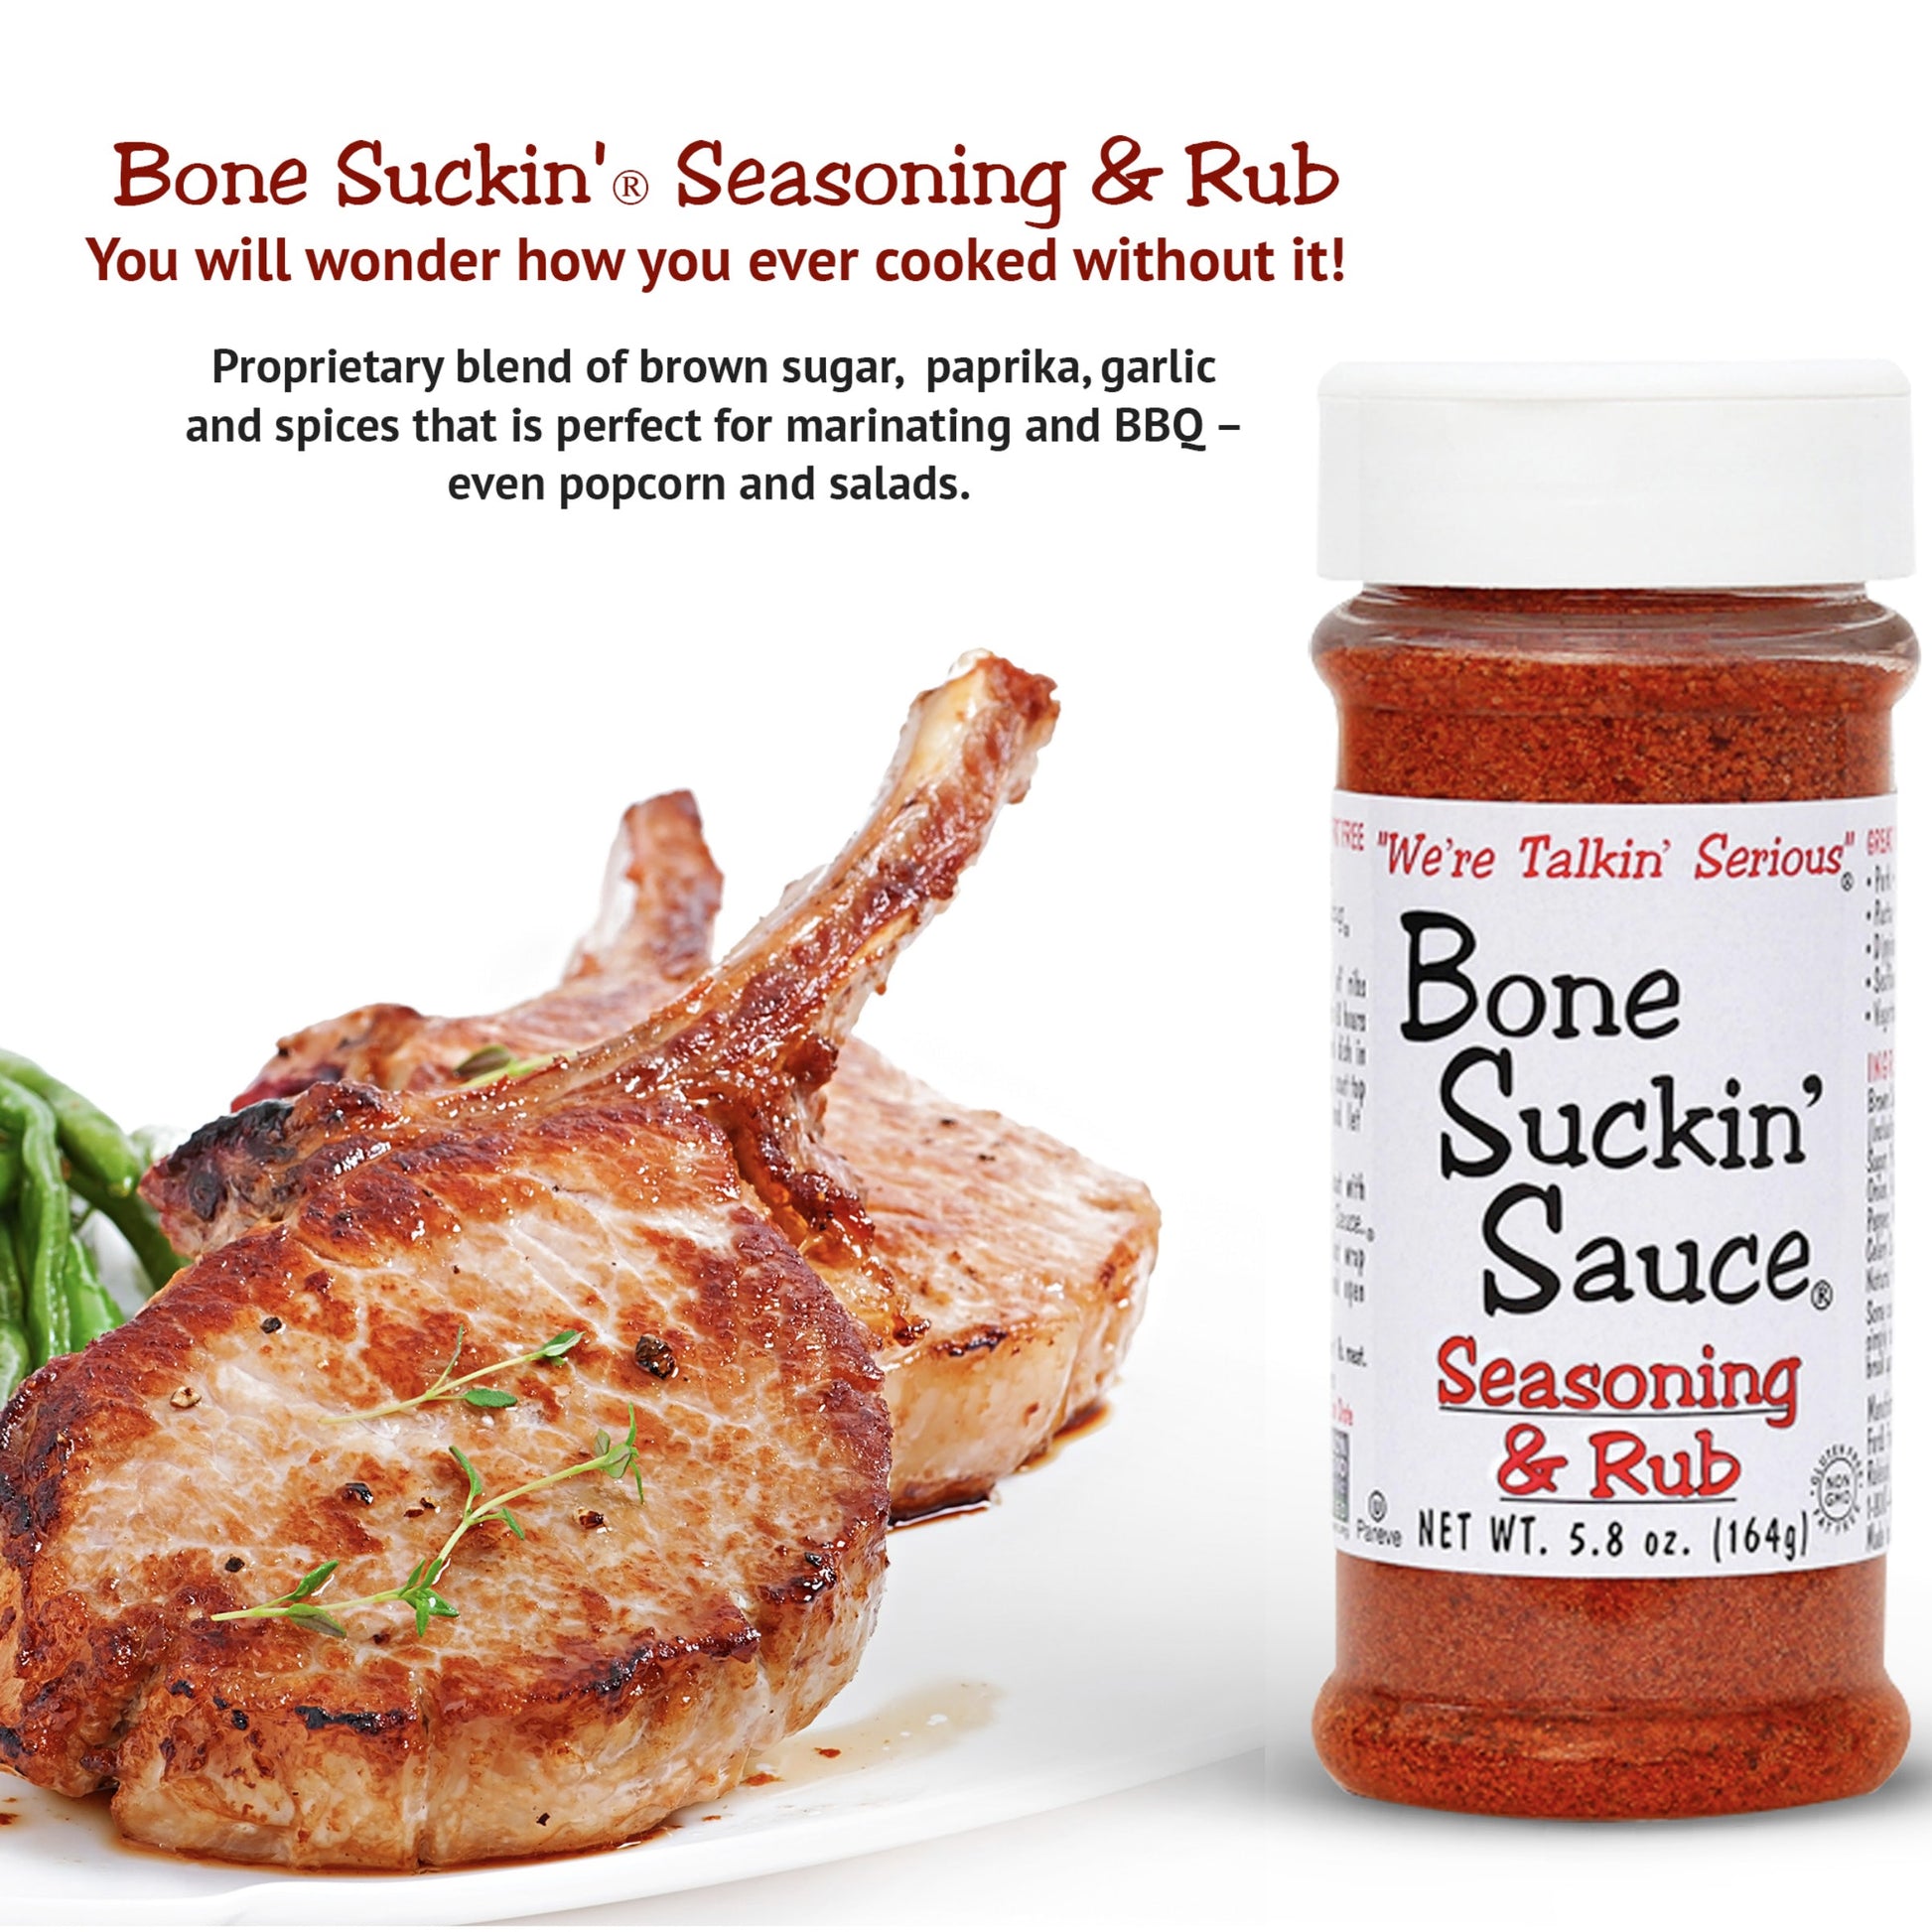 Bone Suckin' Seasoning & Rub, Original Blend, 5.8 Oz - Grilling Rubs, Dry Steak Rub, Great on Ribs, Pork, Beef, Chicken, Seafood, Pasta, Vegetables, Steaks - Gluten Free, Fat Free